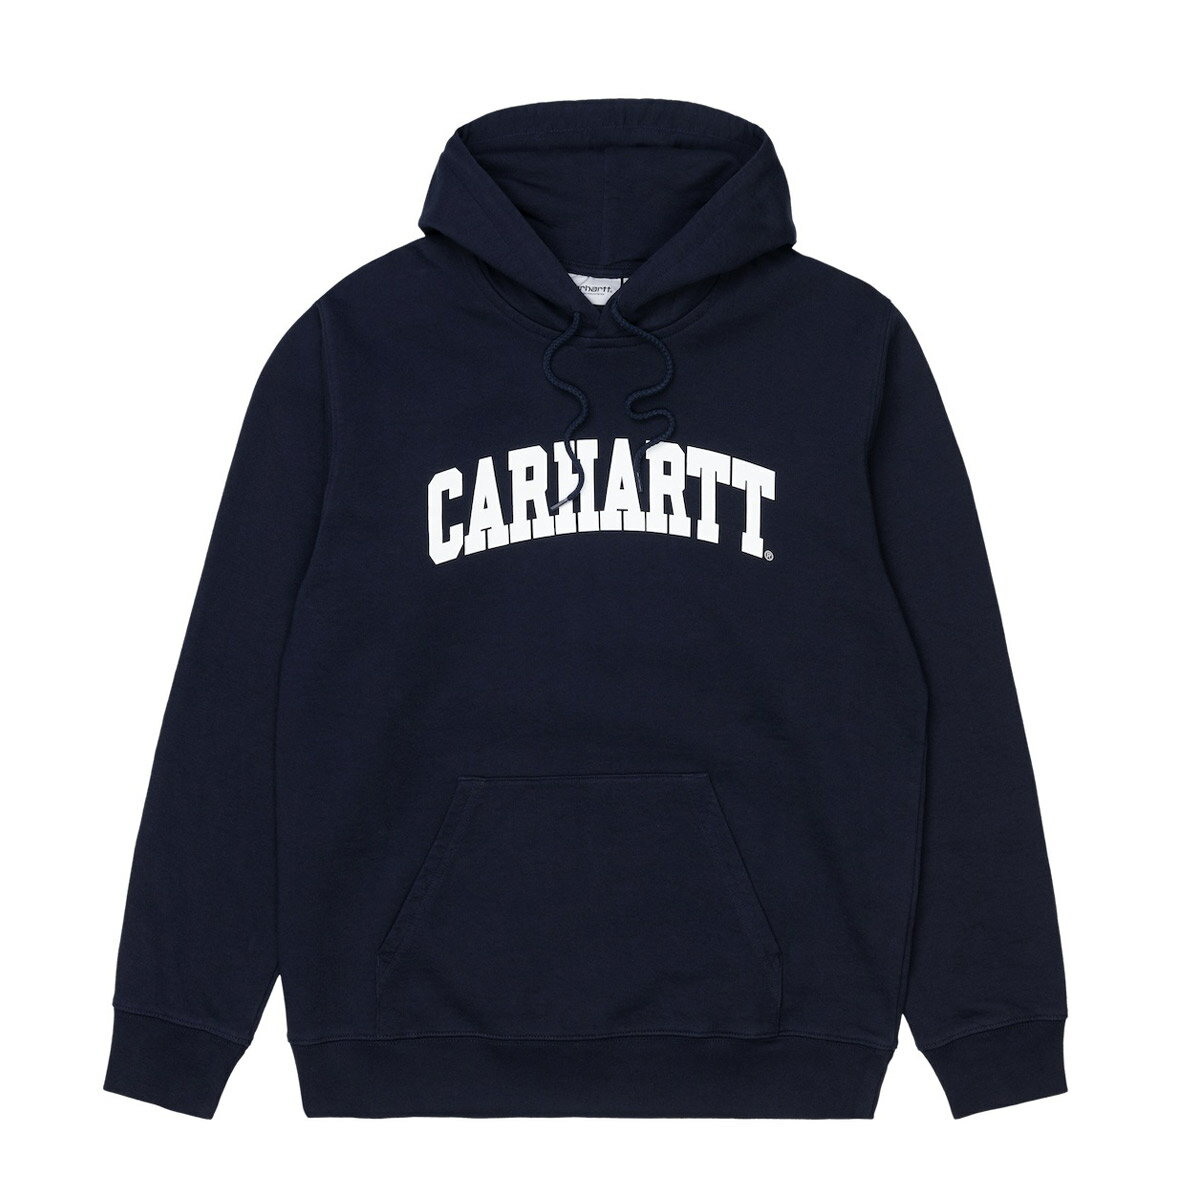 CARHARTT HOODED UNIVERSITY SWEATSHIRT(Dark Navy / White)(カーハート フーデッド ユニバーシティ スウェット シャツ)【メンズ】【パーカー】【21FW-I】